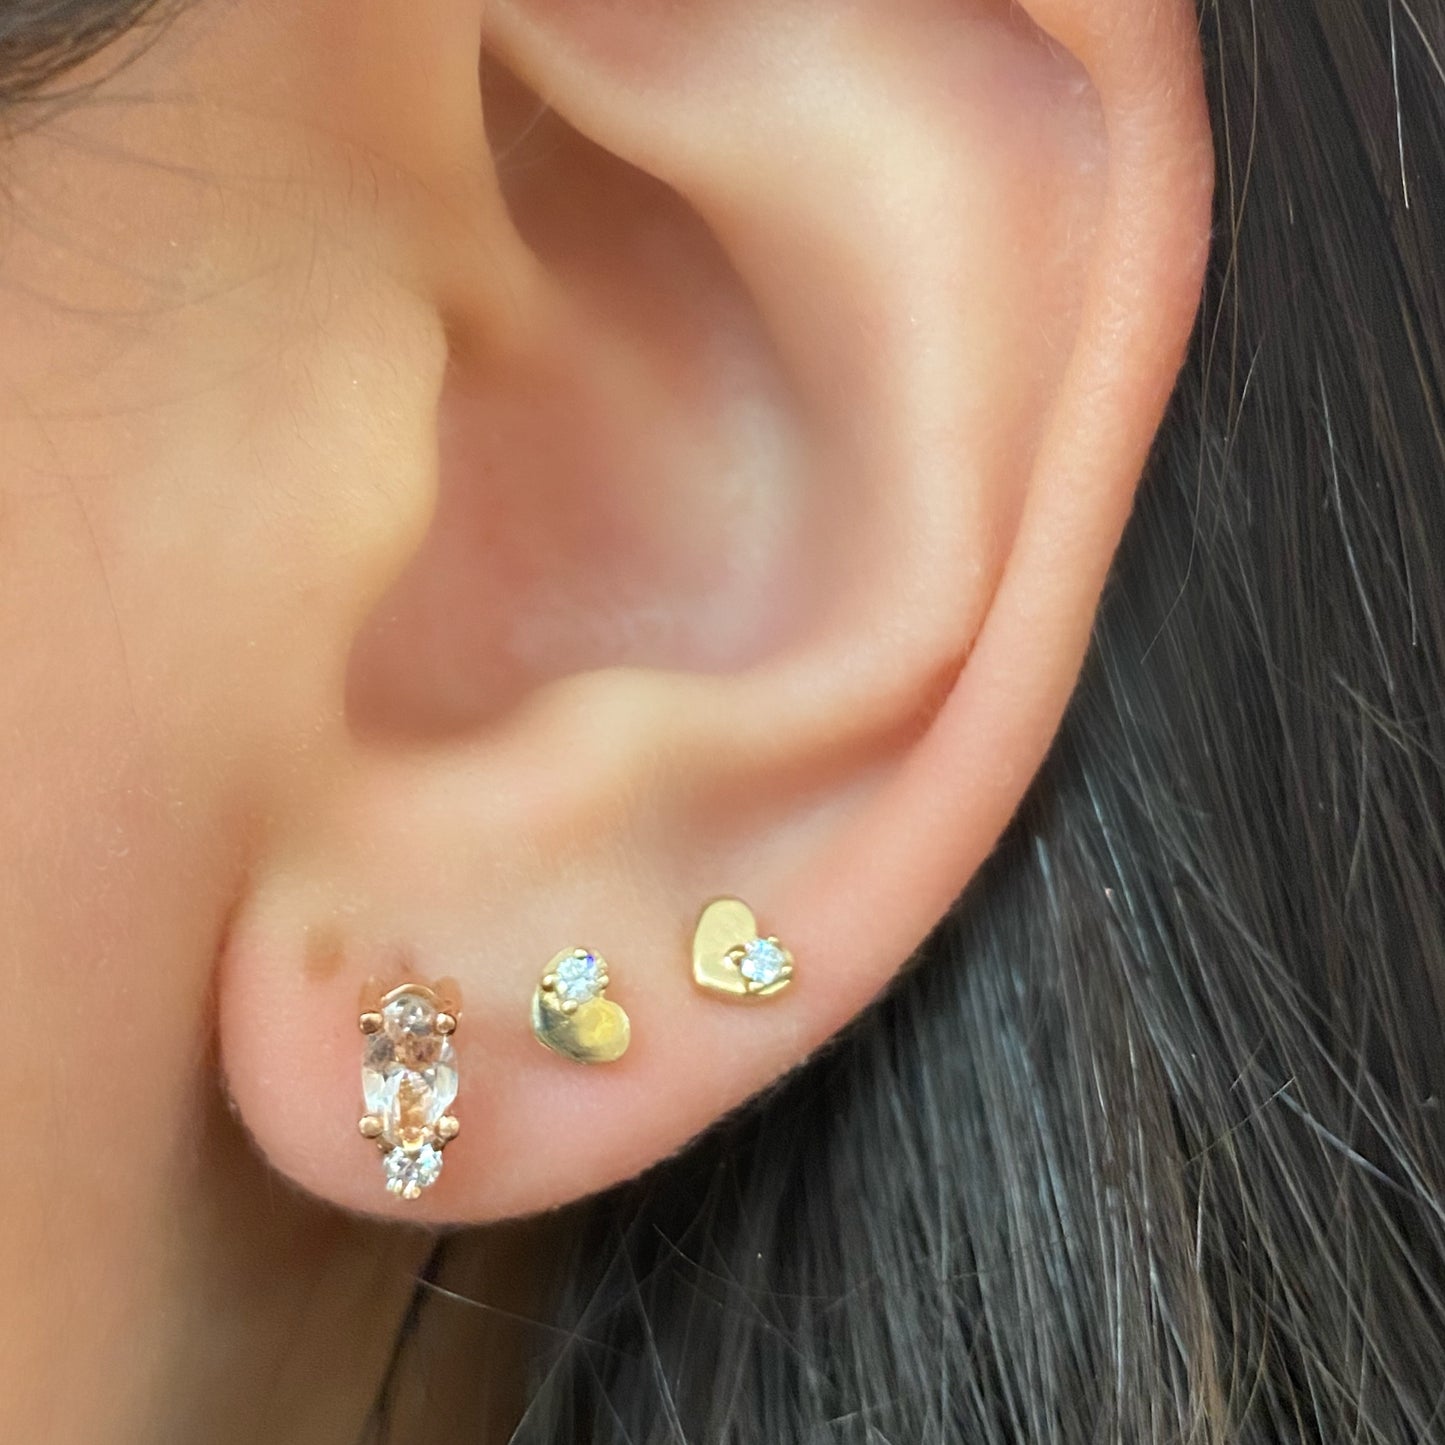 Mini Heart Earrings with Diamond (Pair)